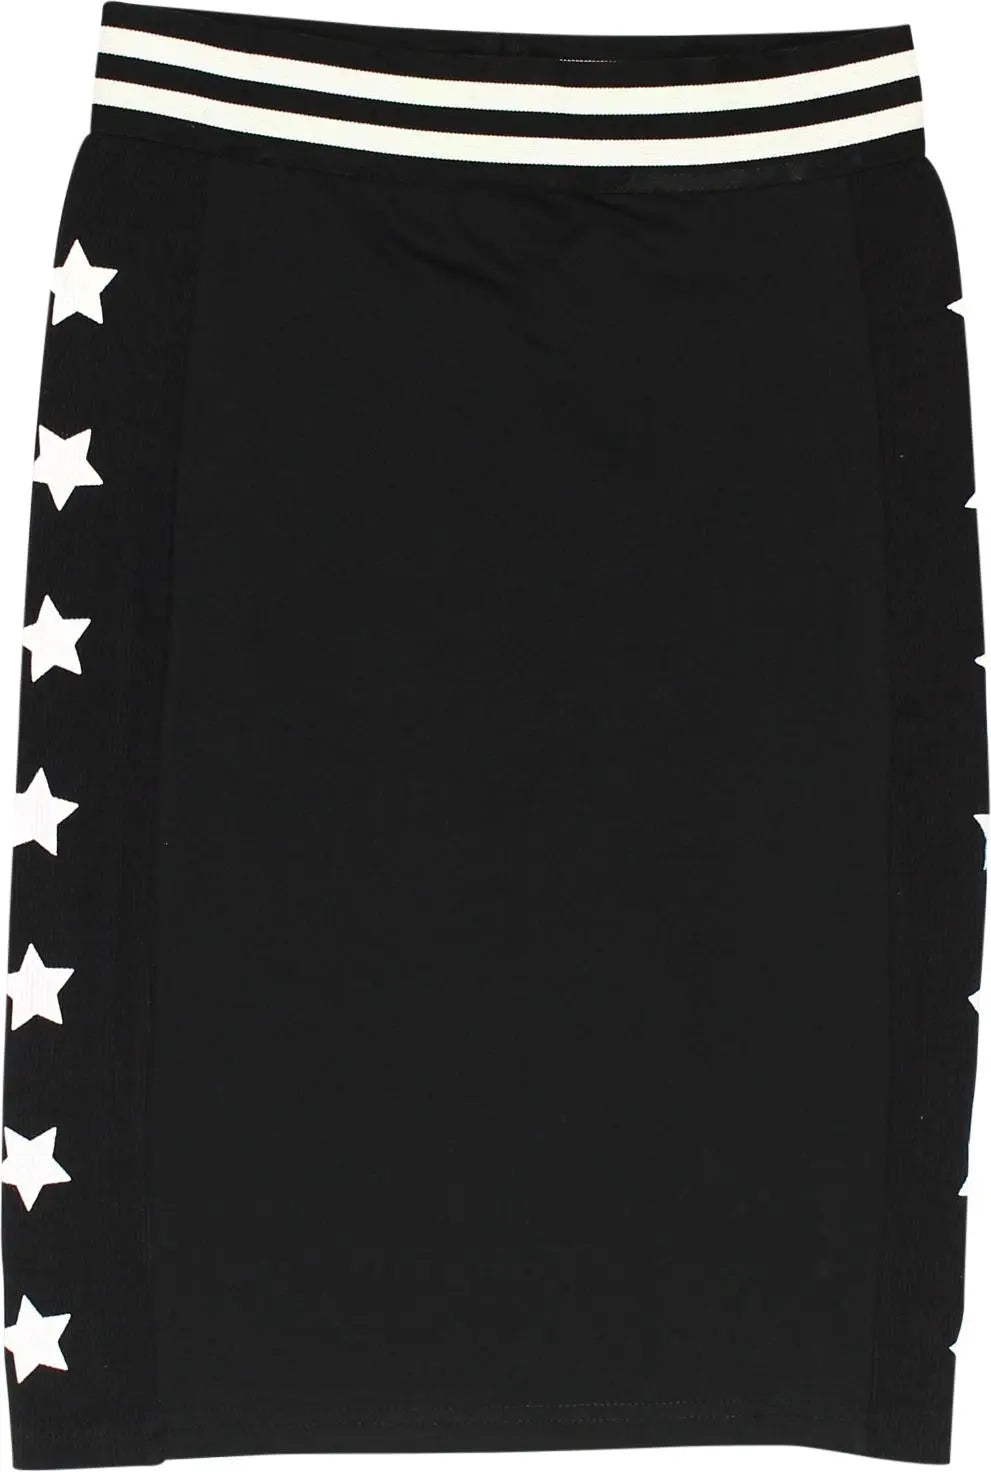 Wibra - Black Skirt- ThriftTale.com - Vintage and second handclothing